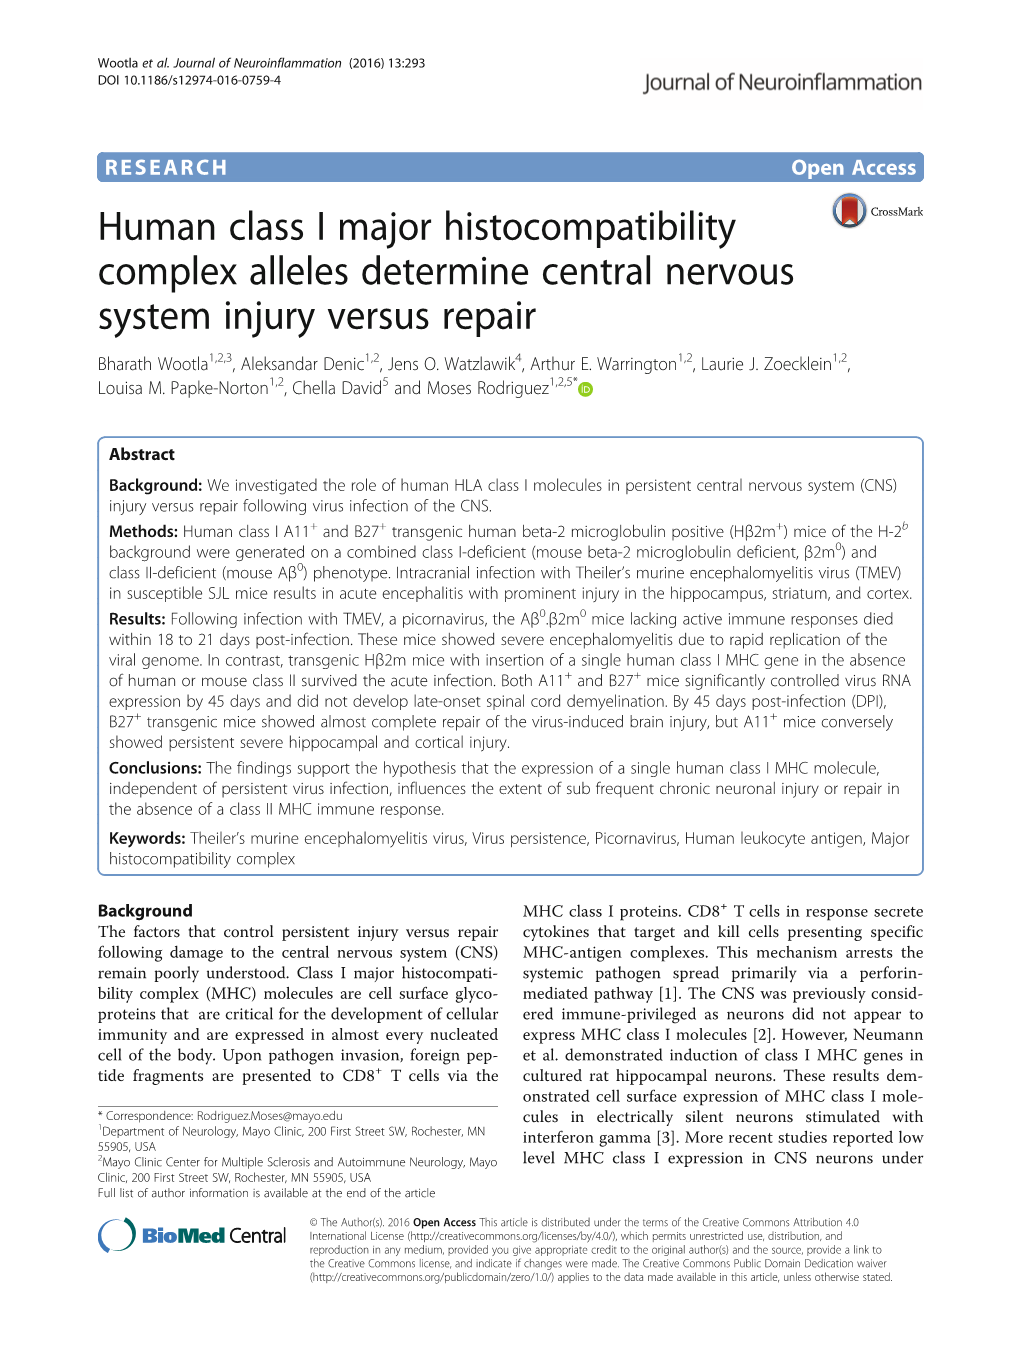 Human Class I Major Histocompatibility Complex Alleles Determine Central Nervous System Injury Versus Repair Bharath Wootla1,2,3, Aleksandar Denic1,2, Jens O